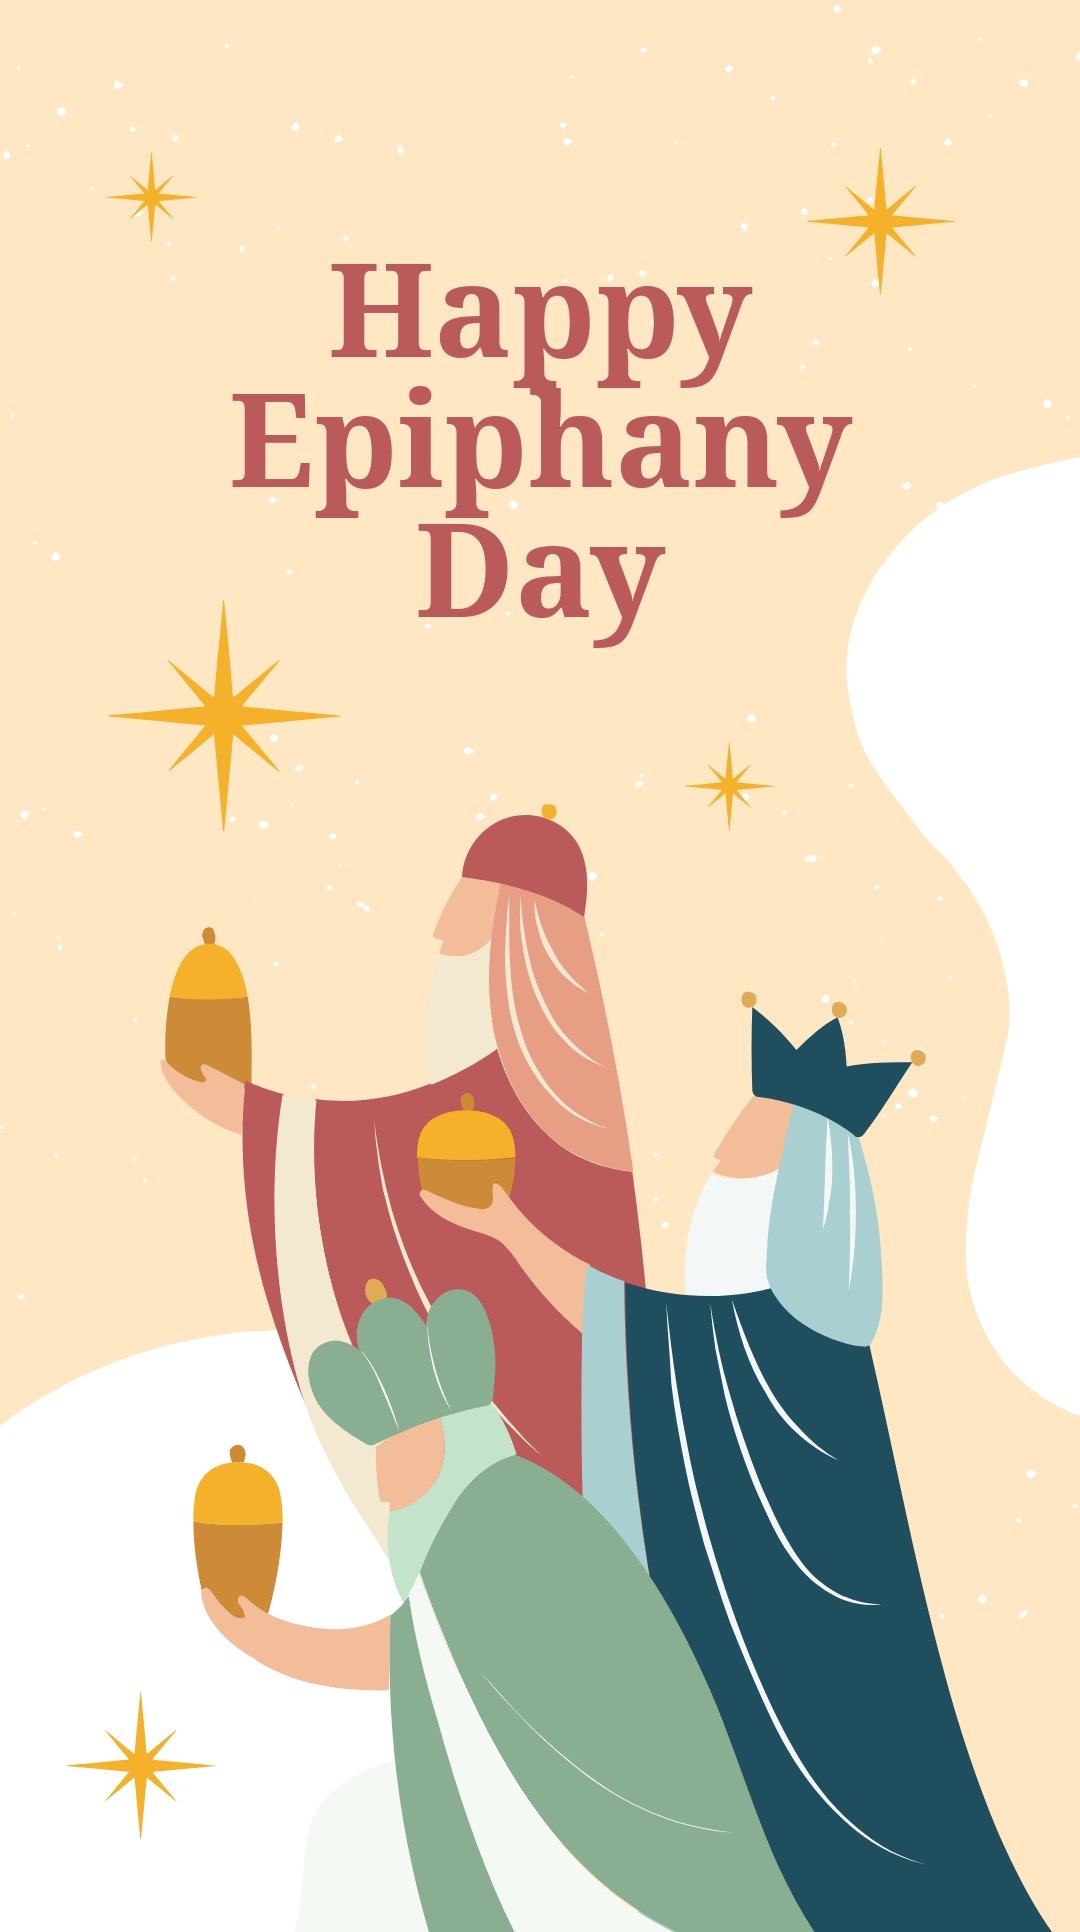 Happy Epiphany Day Whatsapp Post